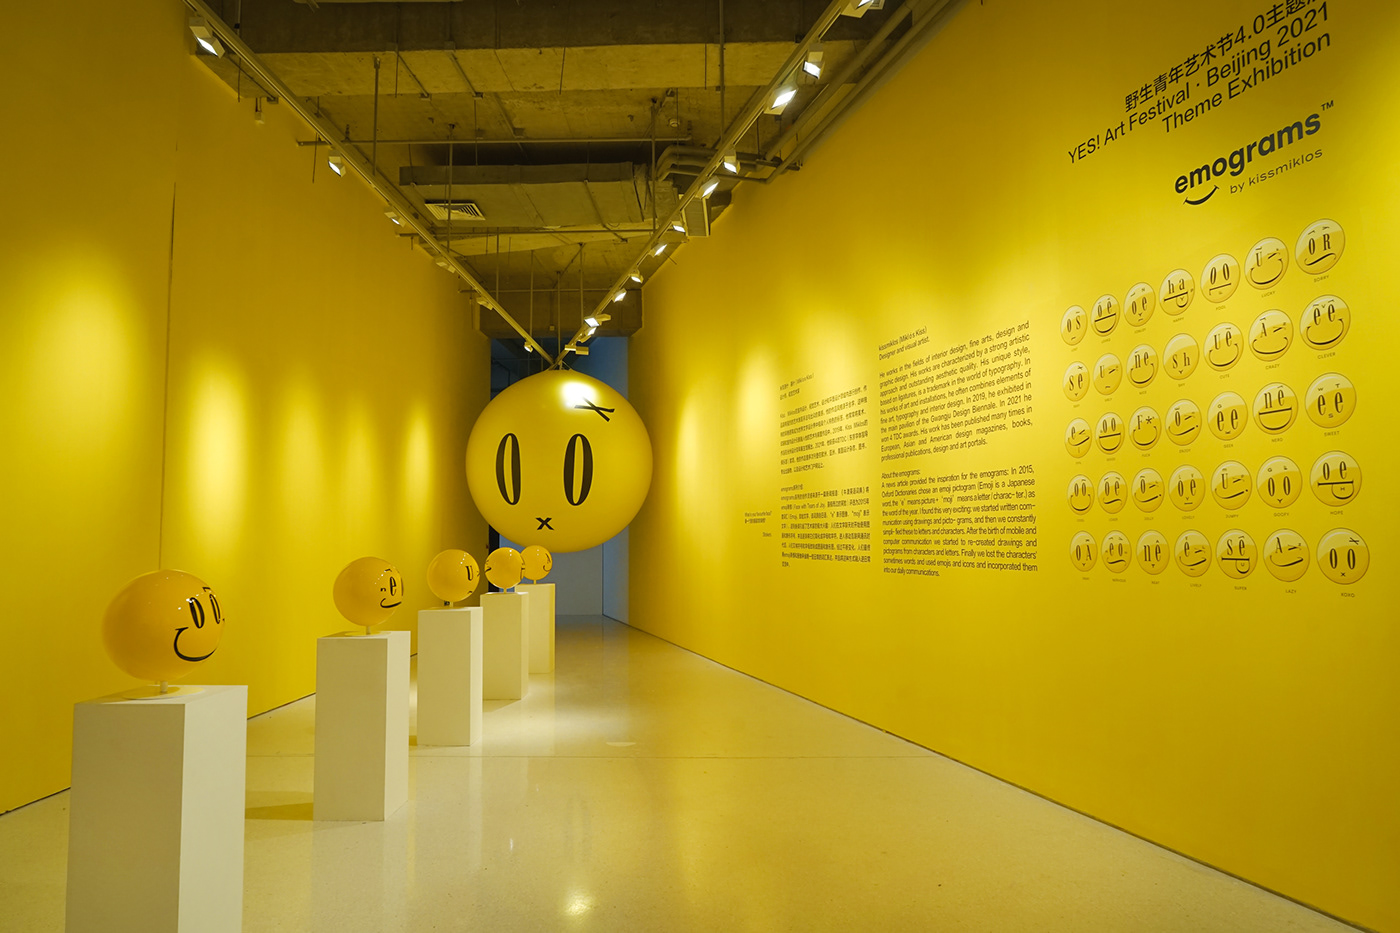 ball installation emogram emograms Exhibition  installation Installation Art Pop Art Street Art  urban art yellow installation